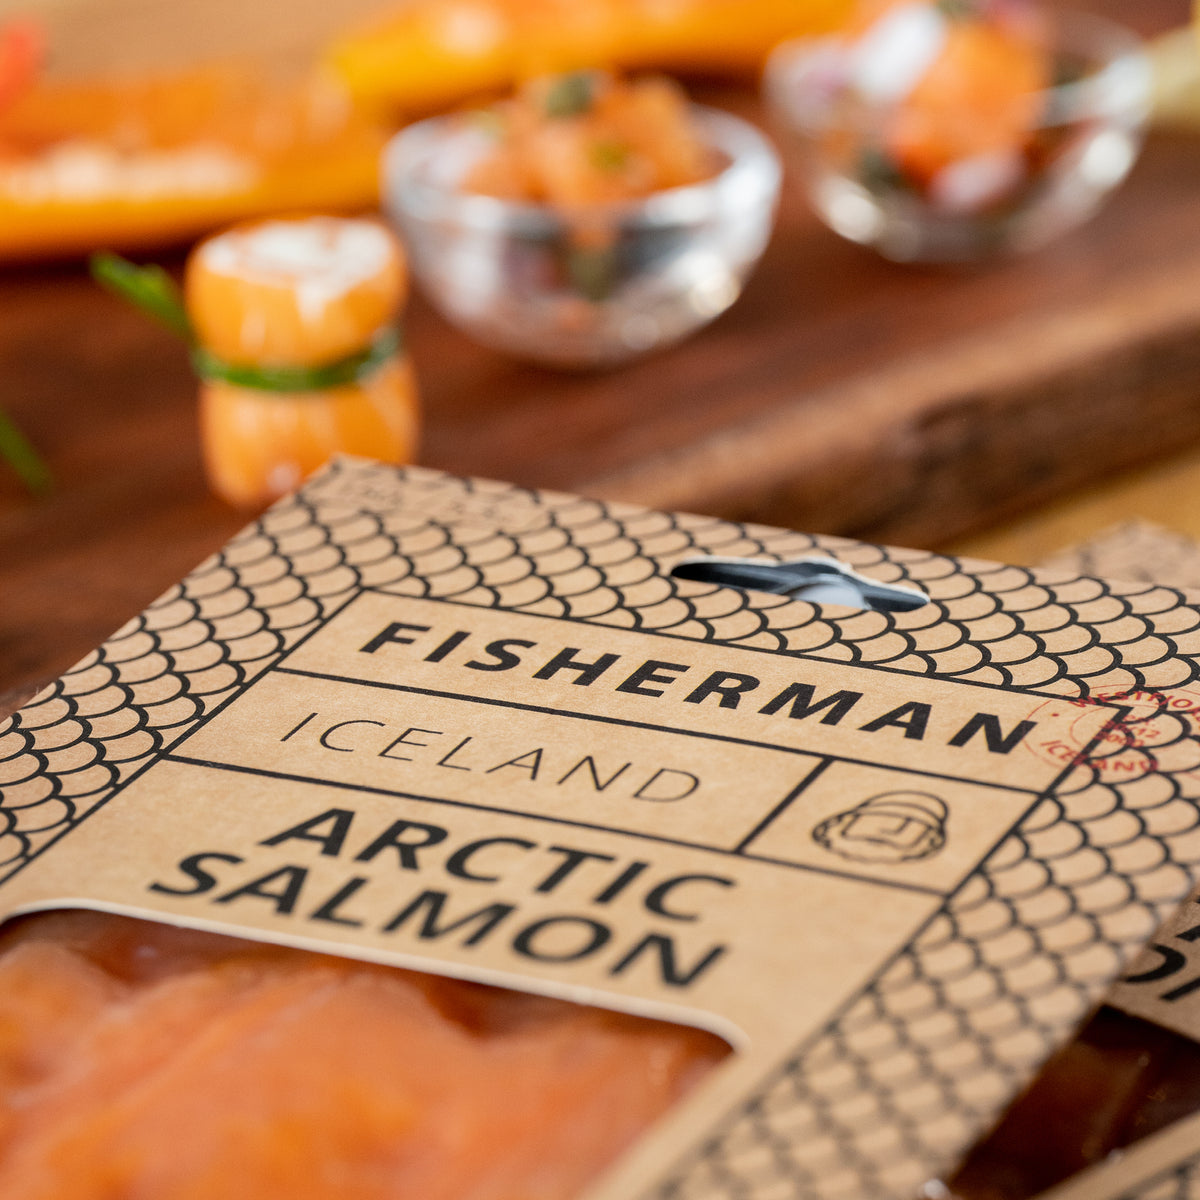 Smoked Salmon, 100gr - Sliced